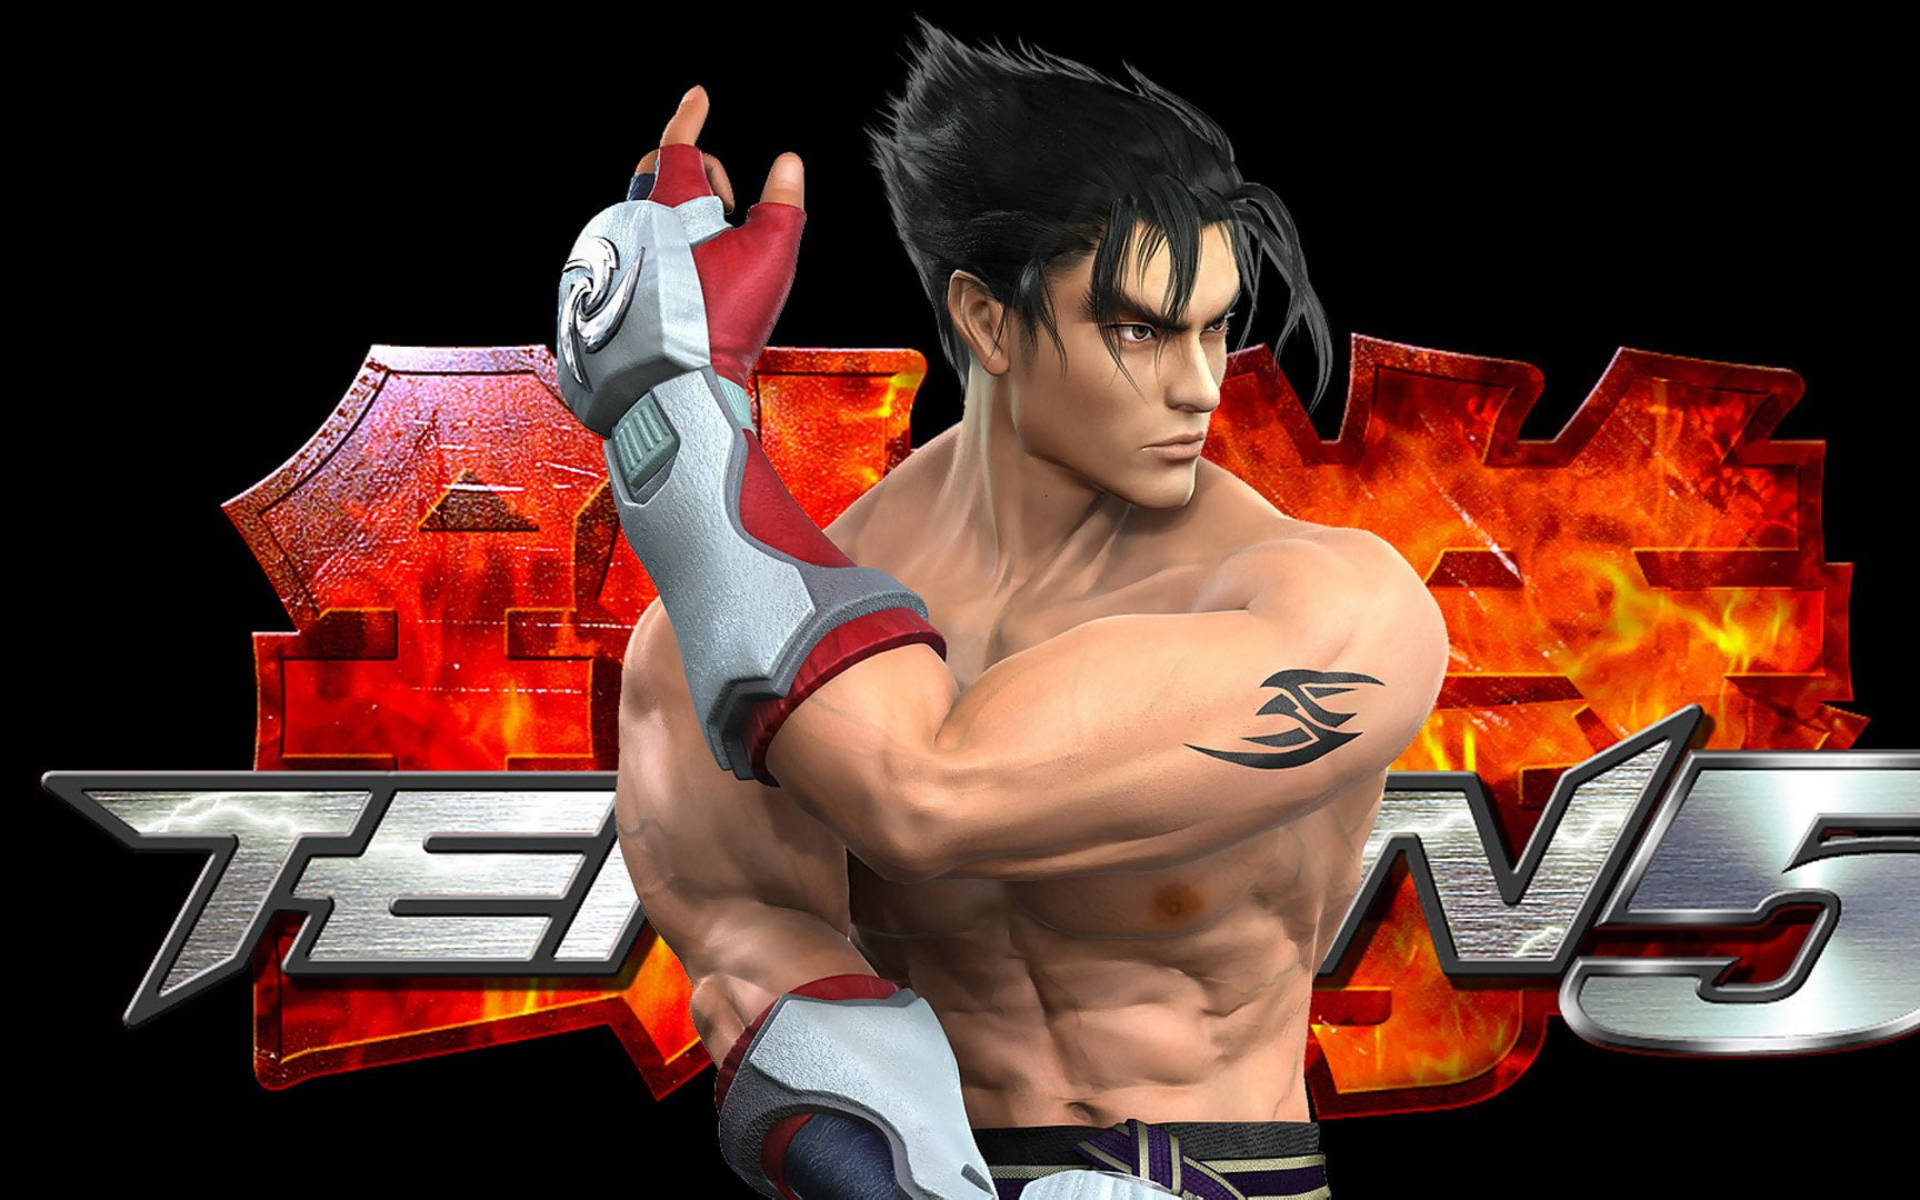 Jin Kazama Tekken 5 Digital Cover Background